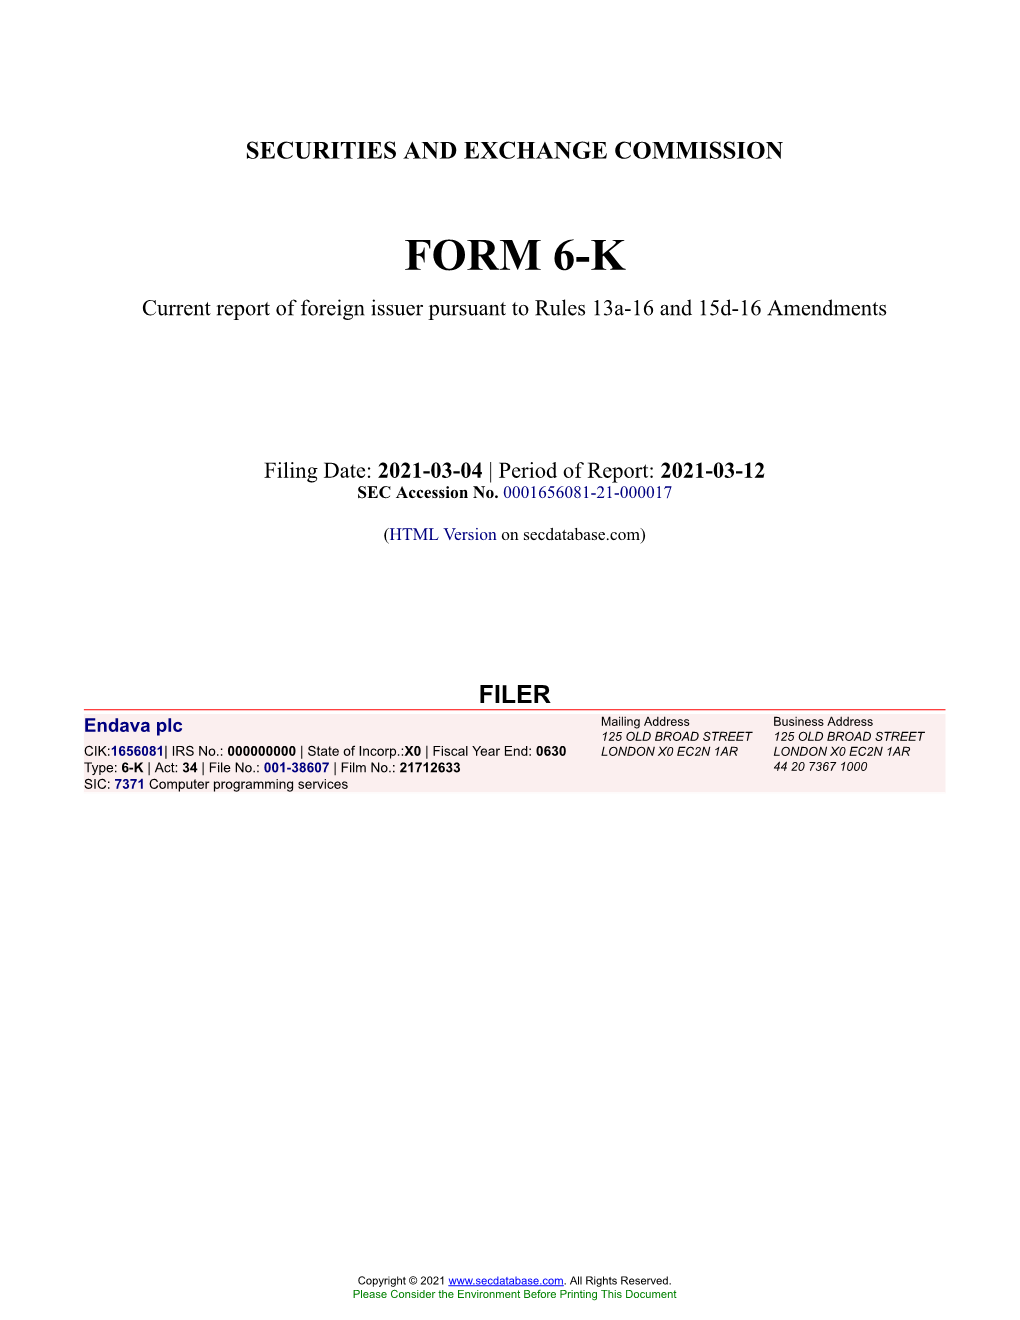 Endava Plc Form 6-K Current Event Report Filed